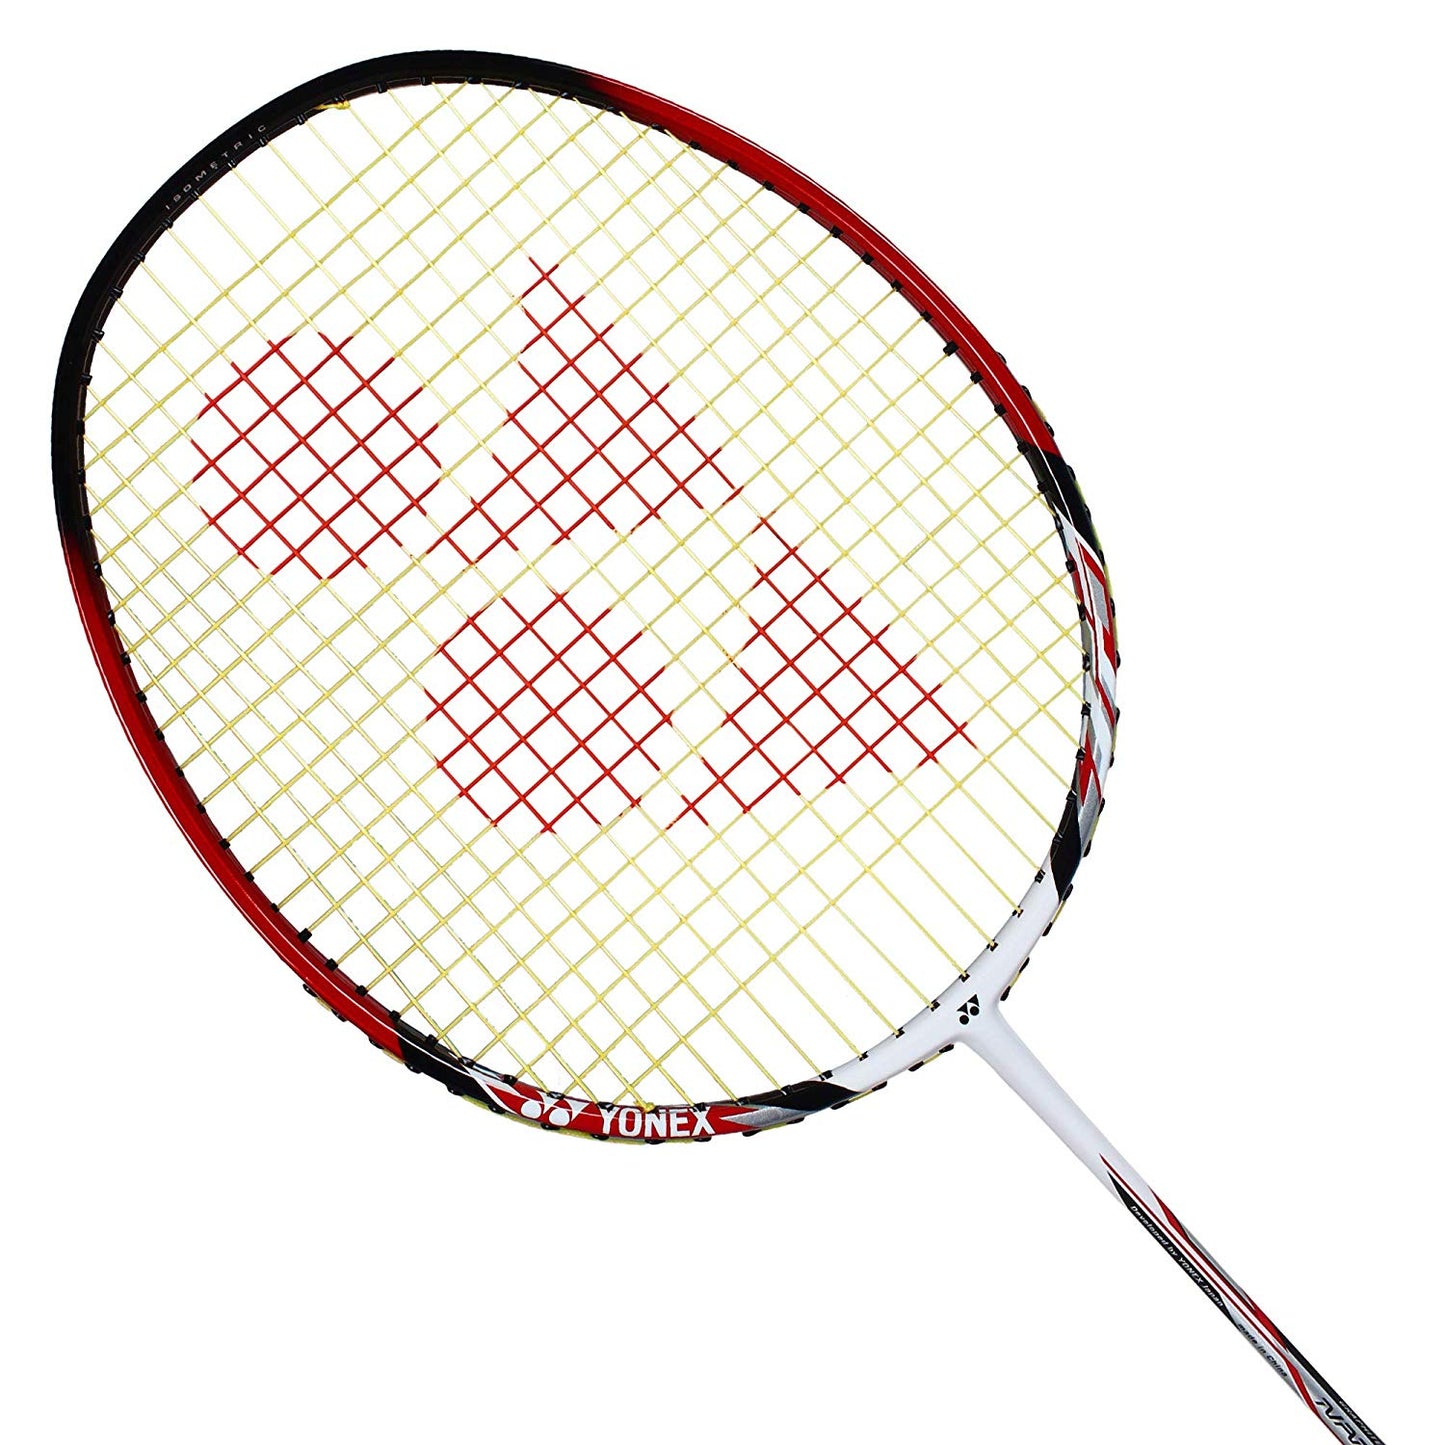 Yonex Nanoray 7000I G4-2U Badminton Racquet (Wine Red) - Best Price online Prokicksports.com